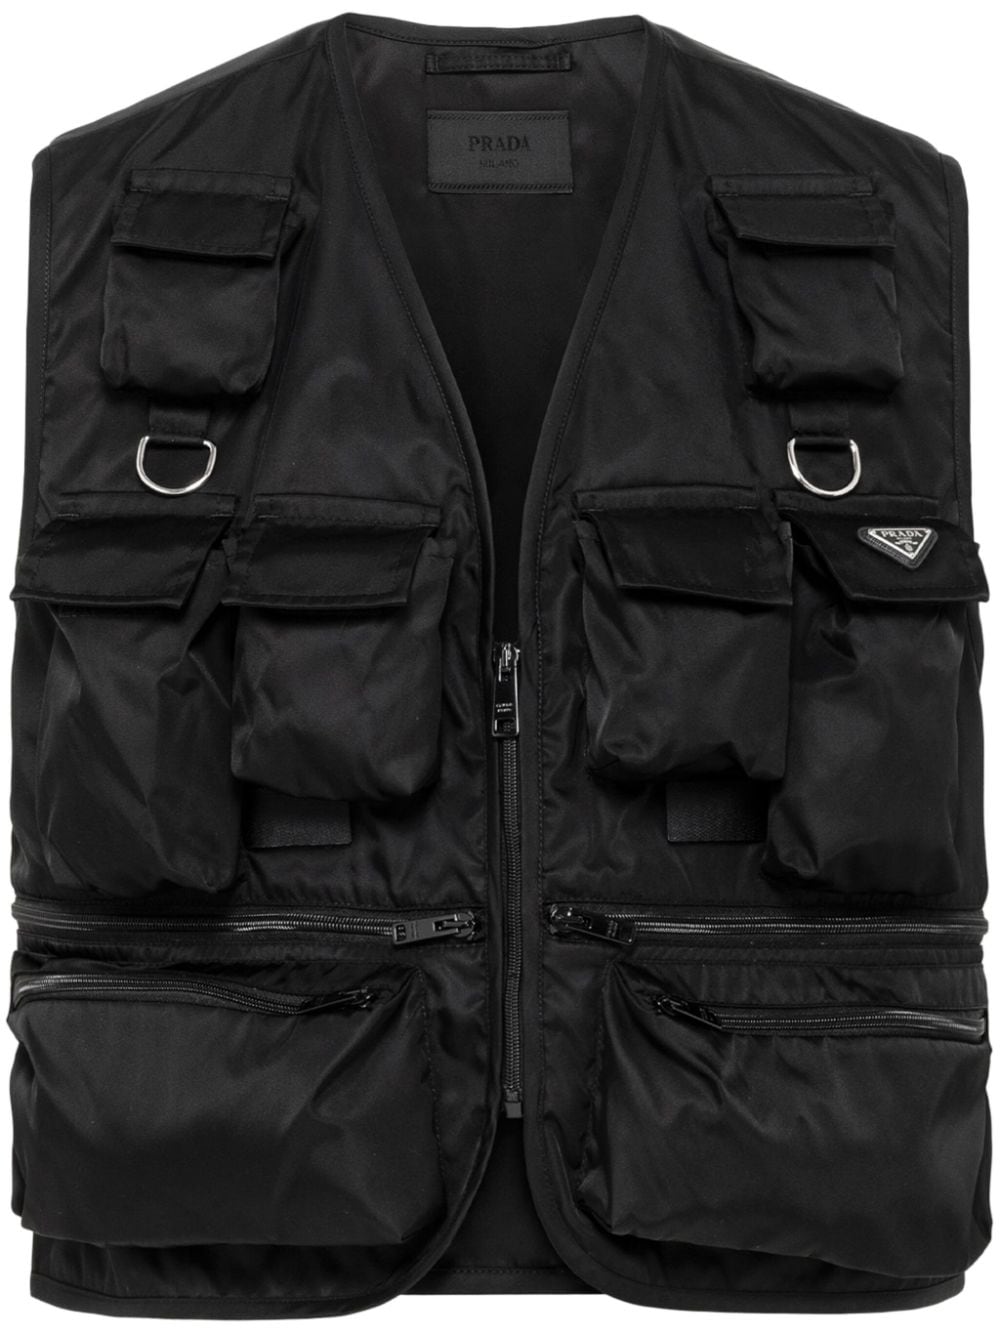 Re-Nylon utility vest